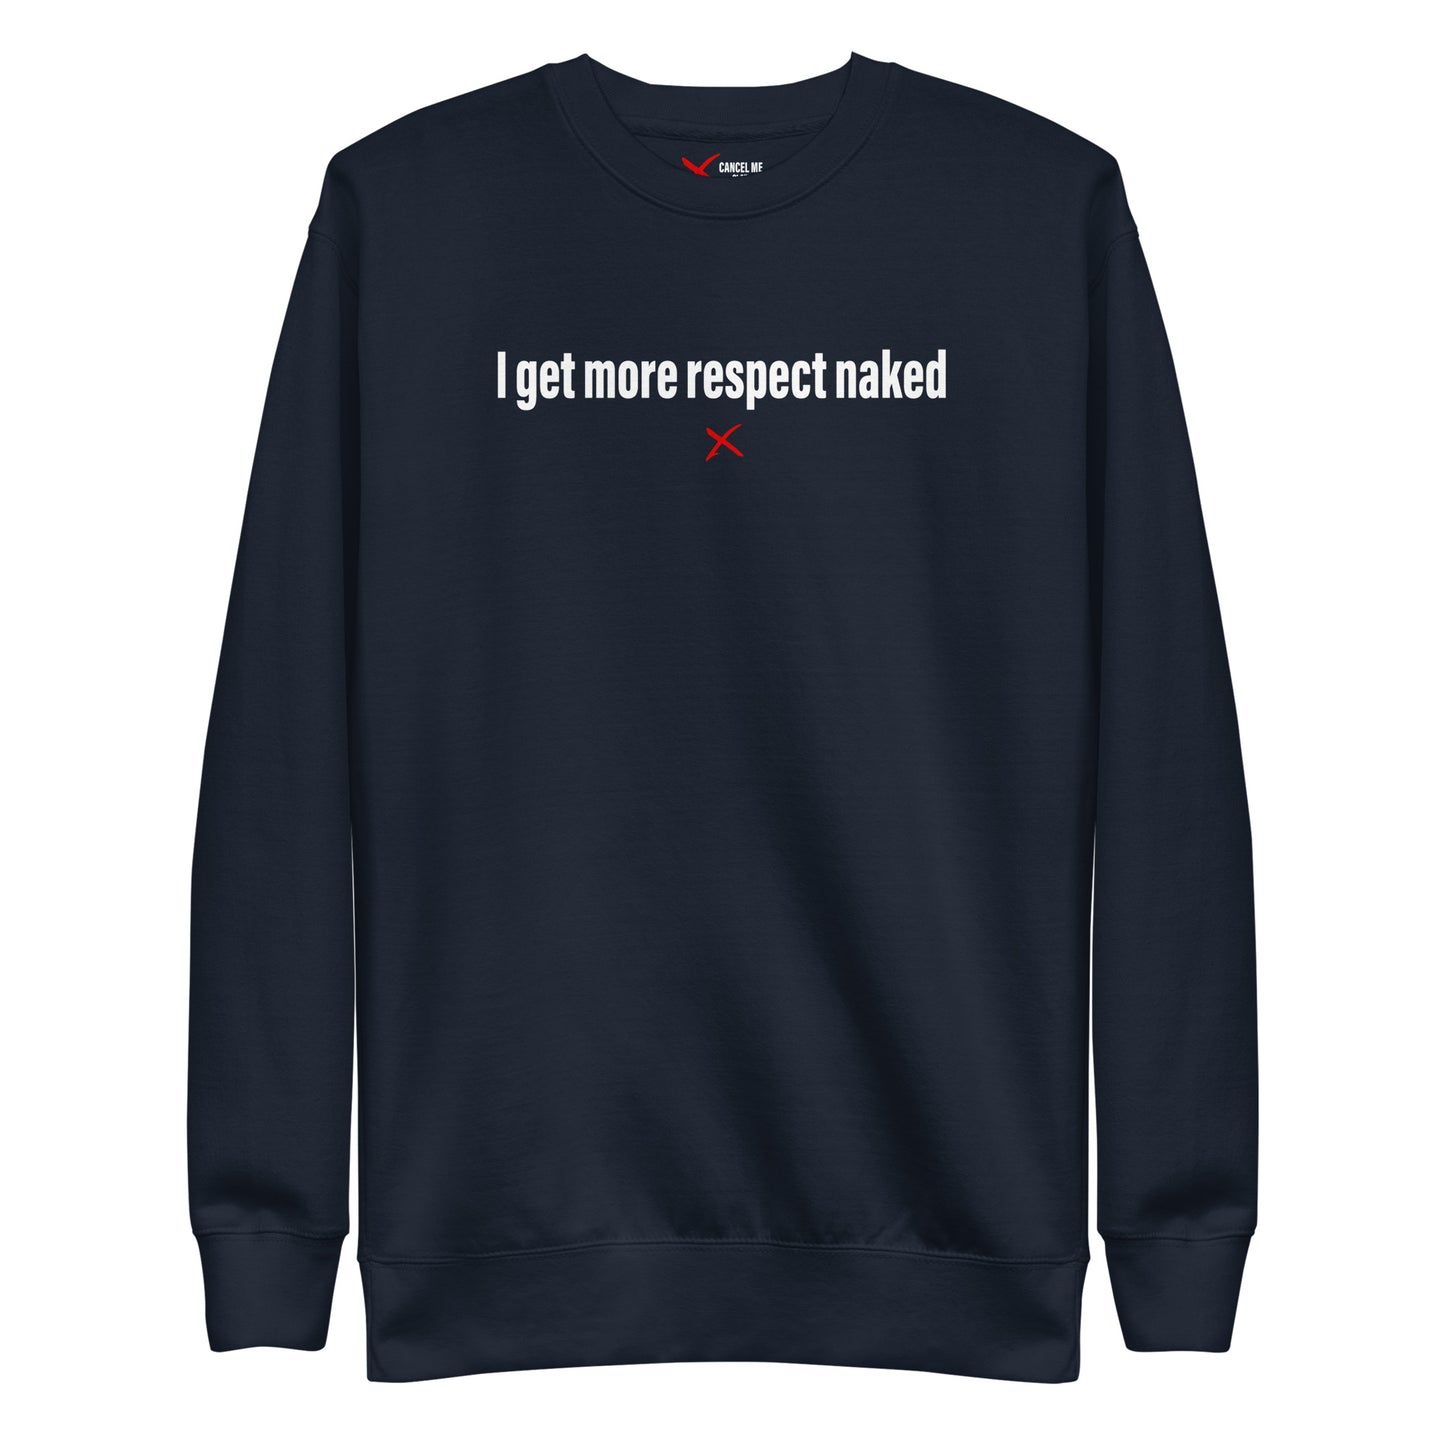 I get more respect naked - Sweatshirt